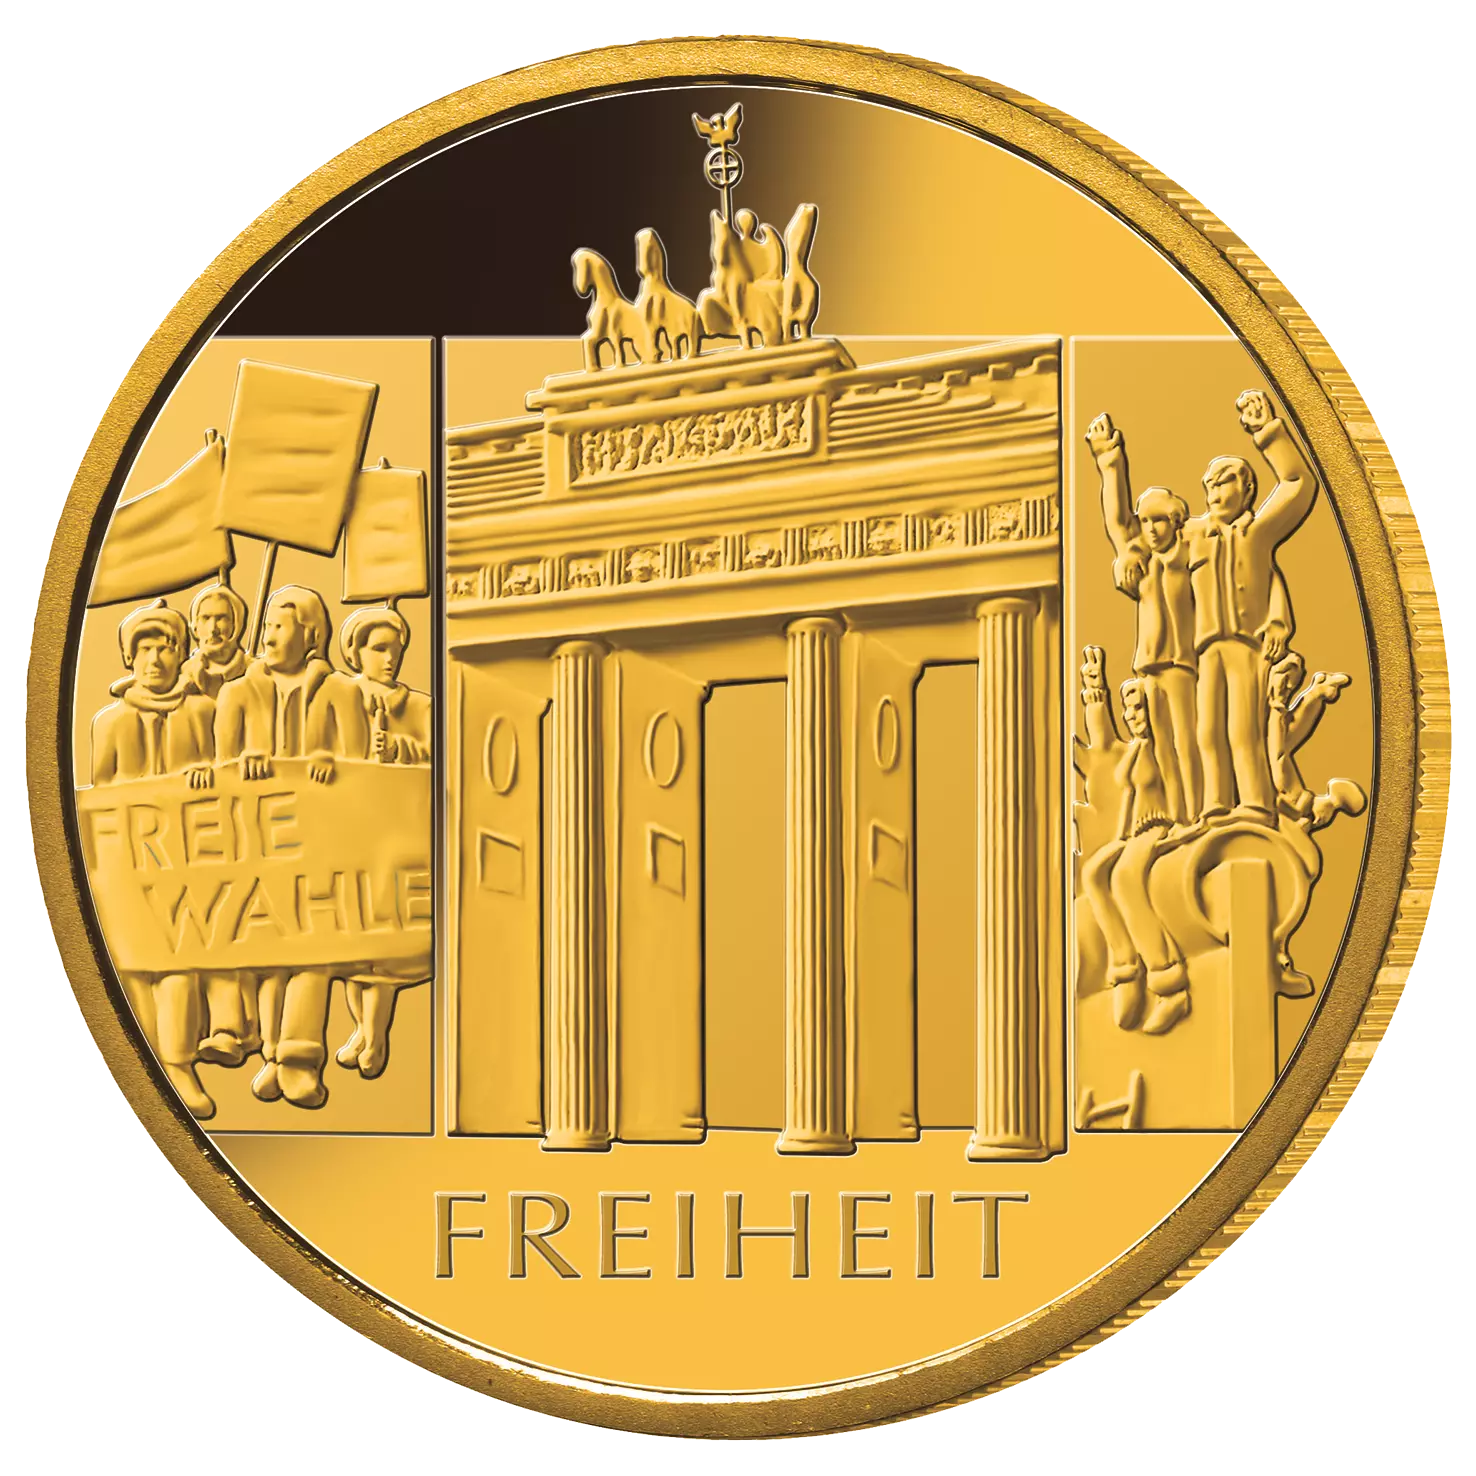 Munzen Euromunzen Goldmunzen Mdm Deutsche Munze